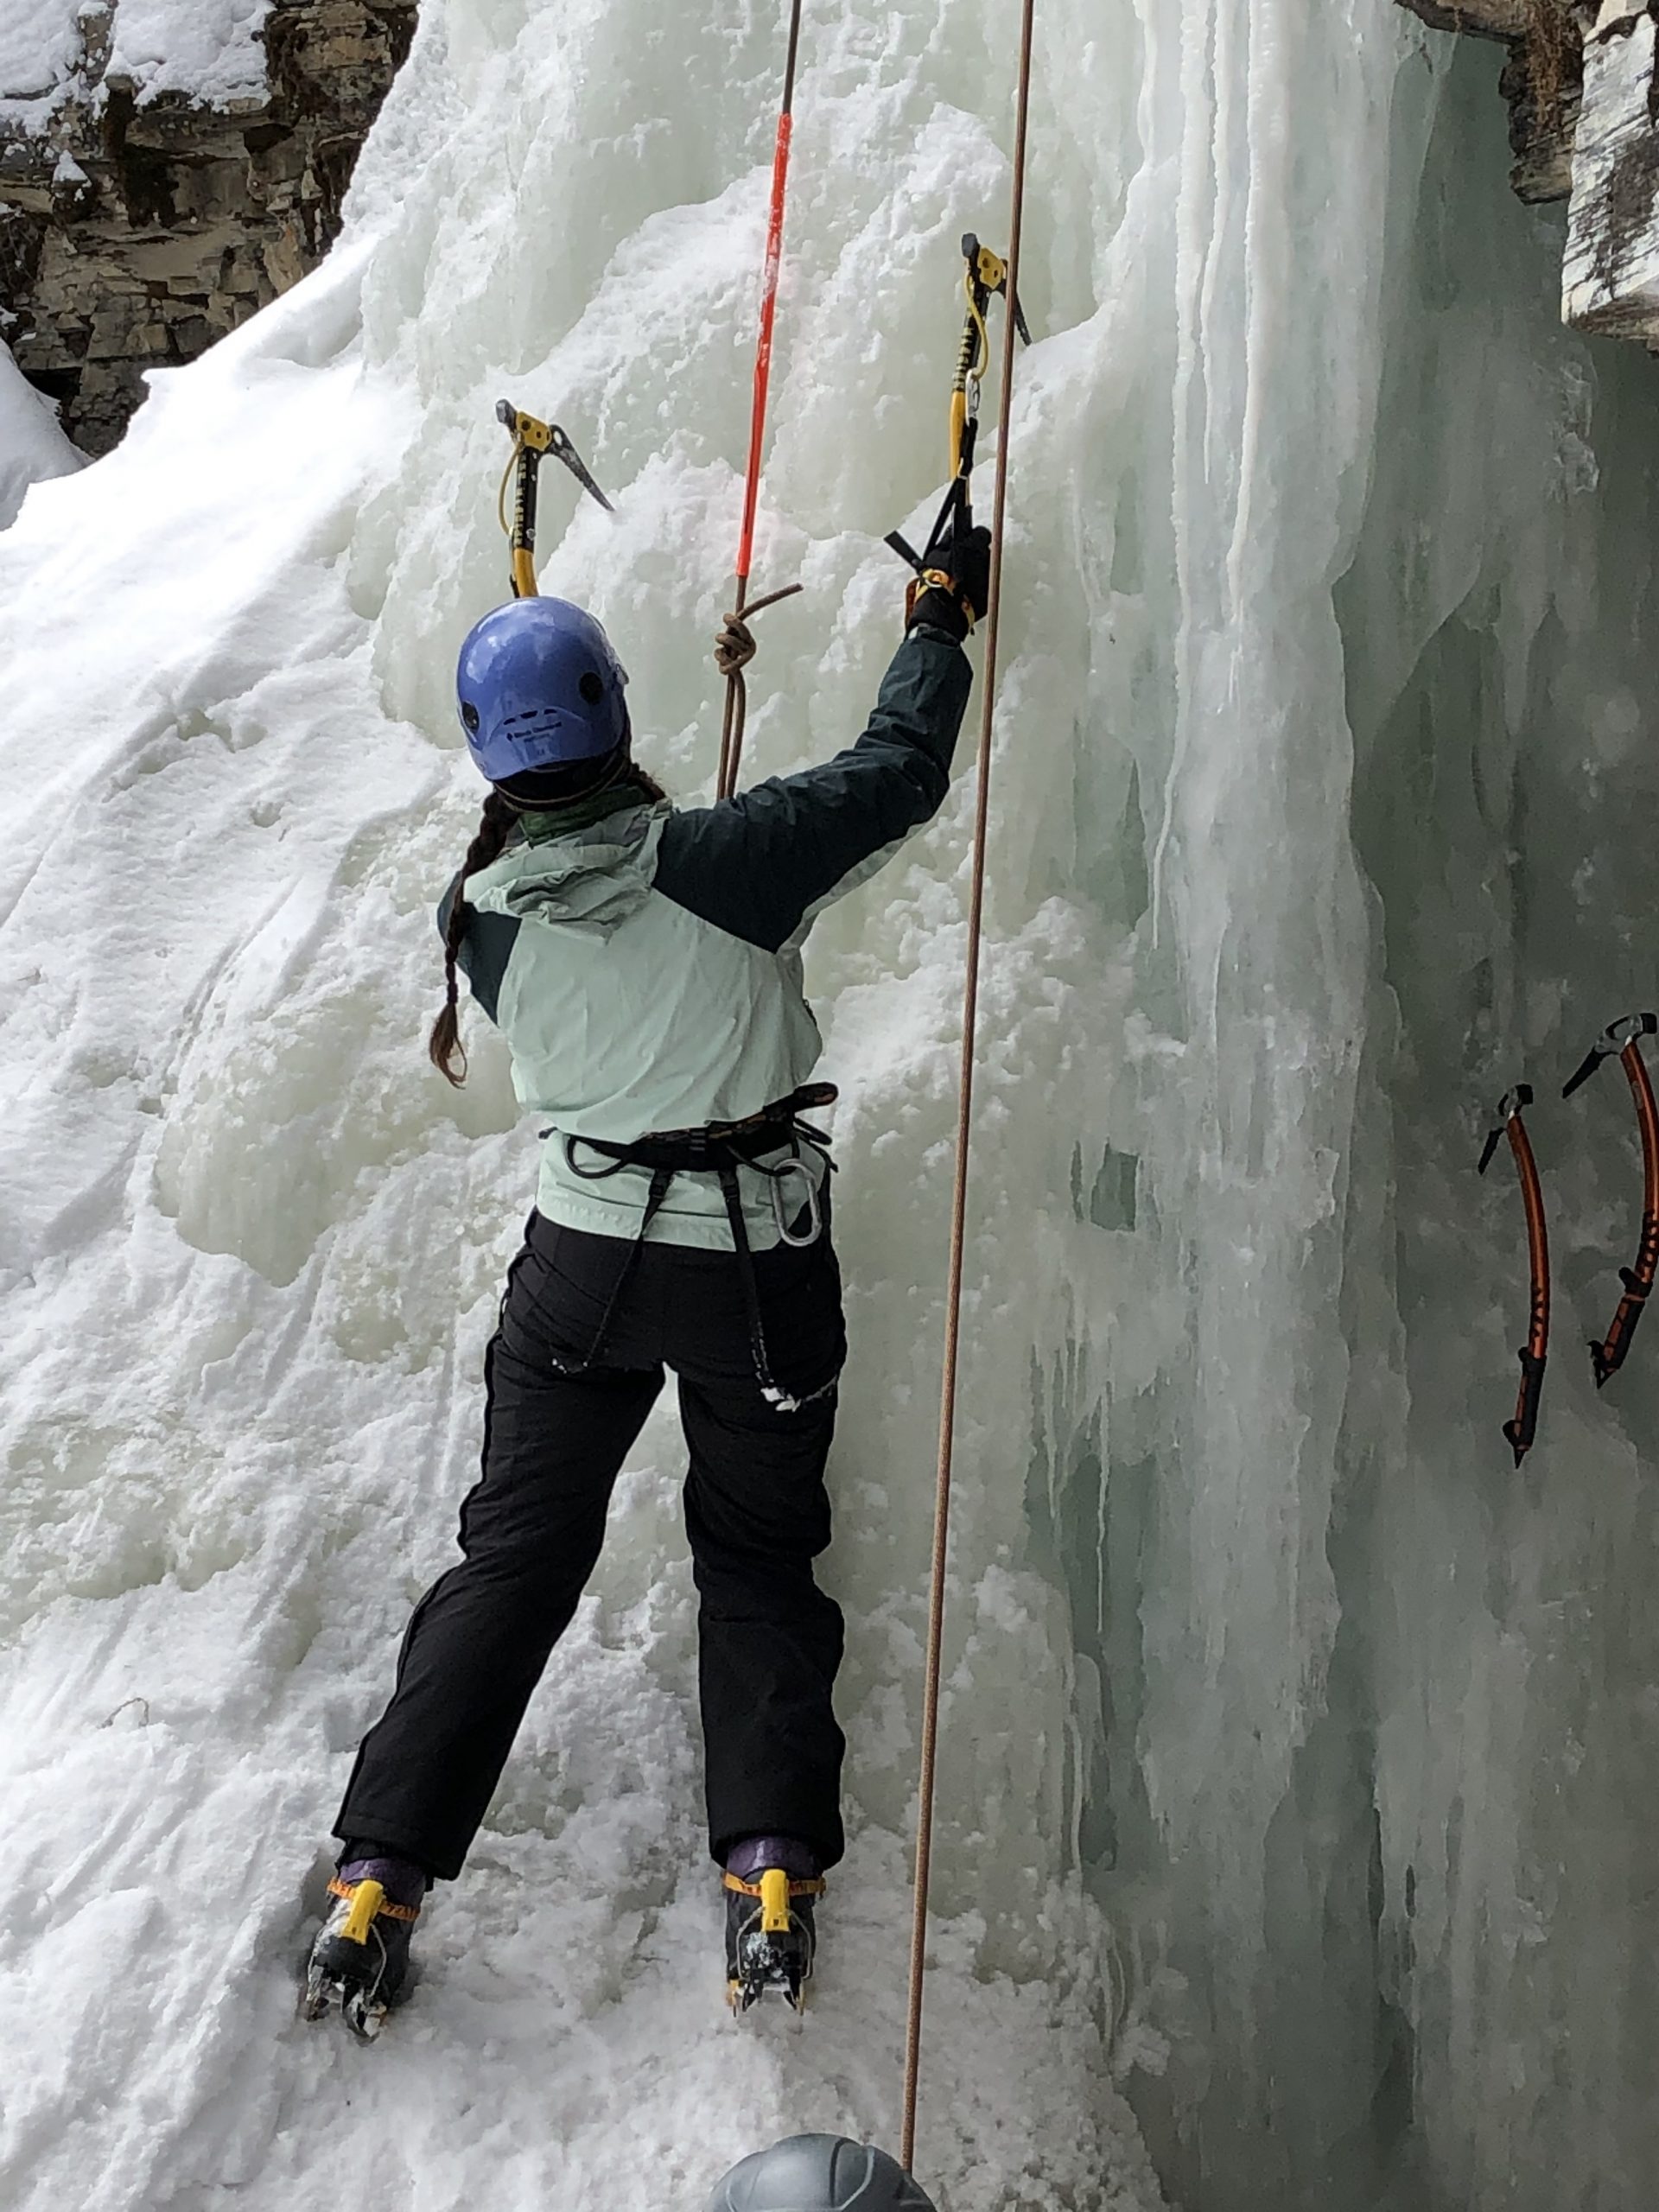 Nichole ice climbing